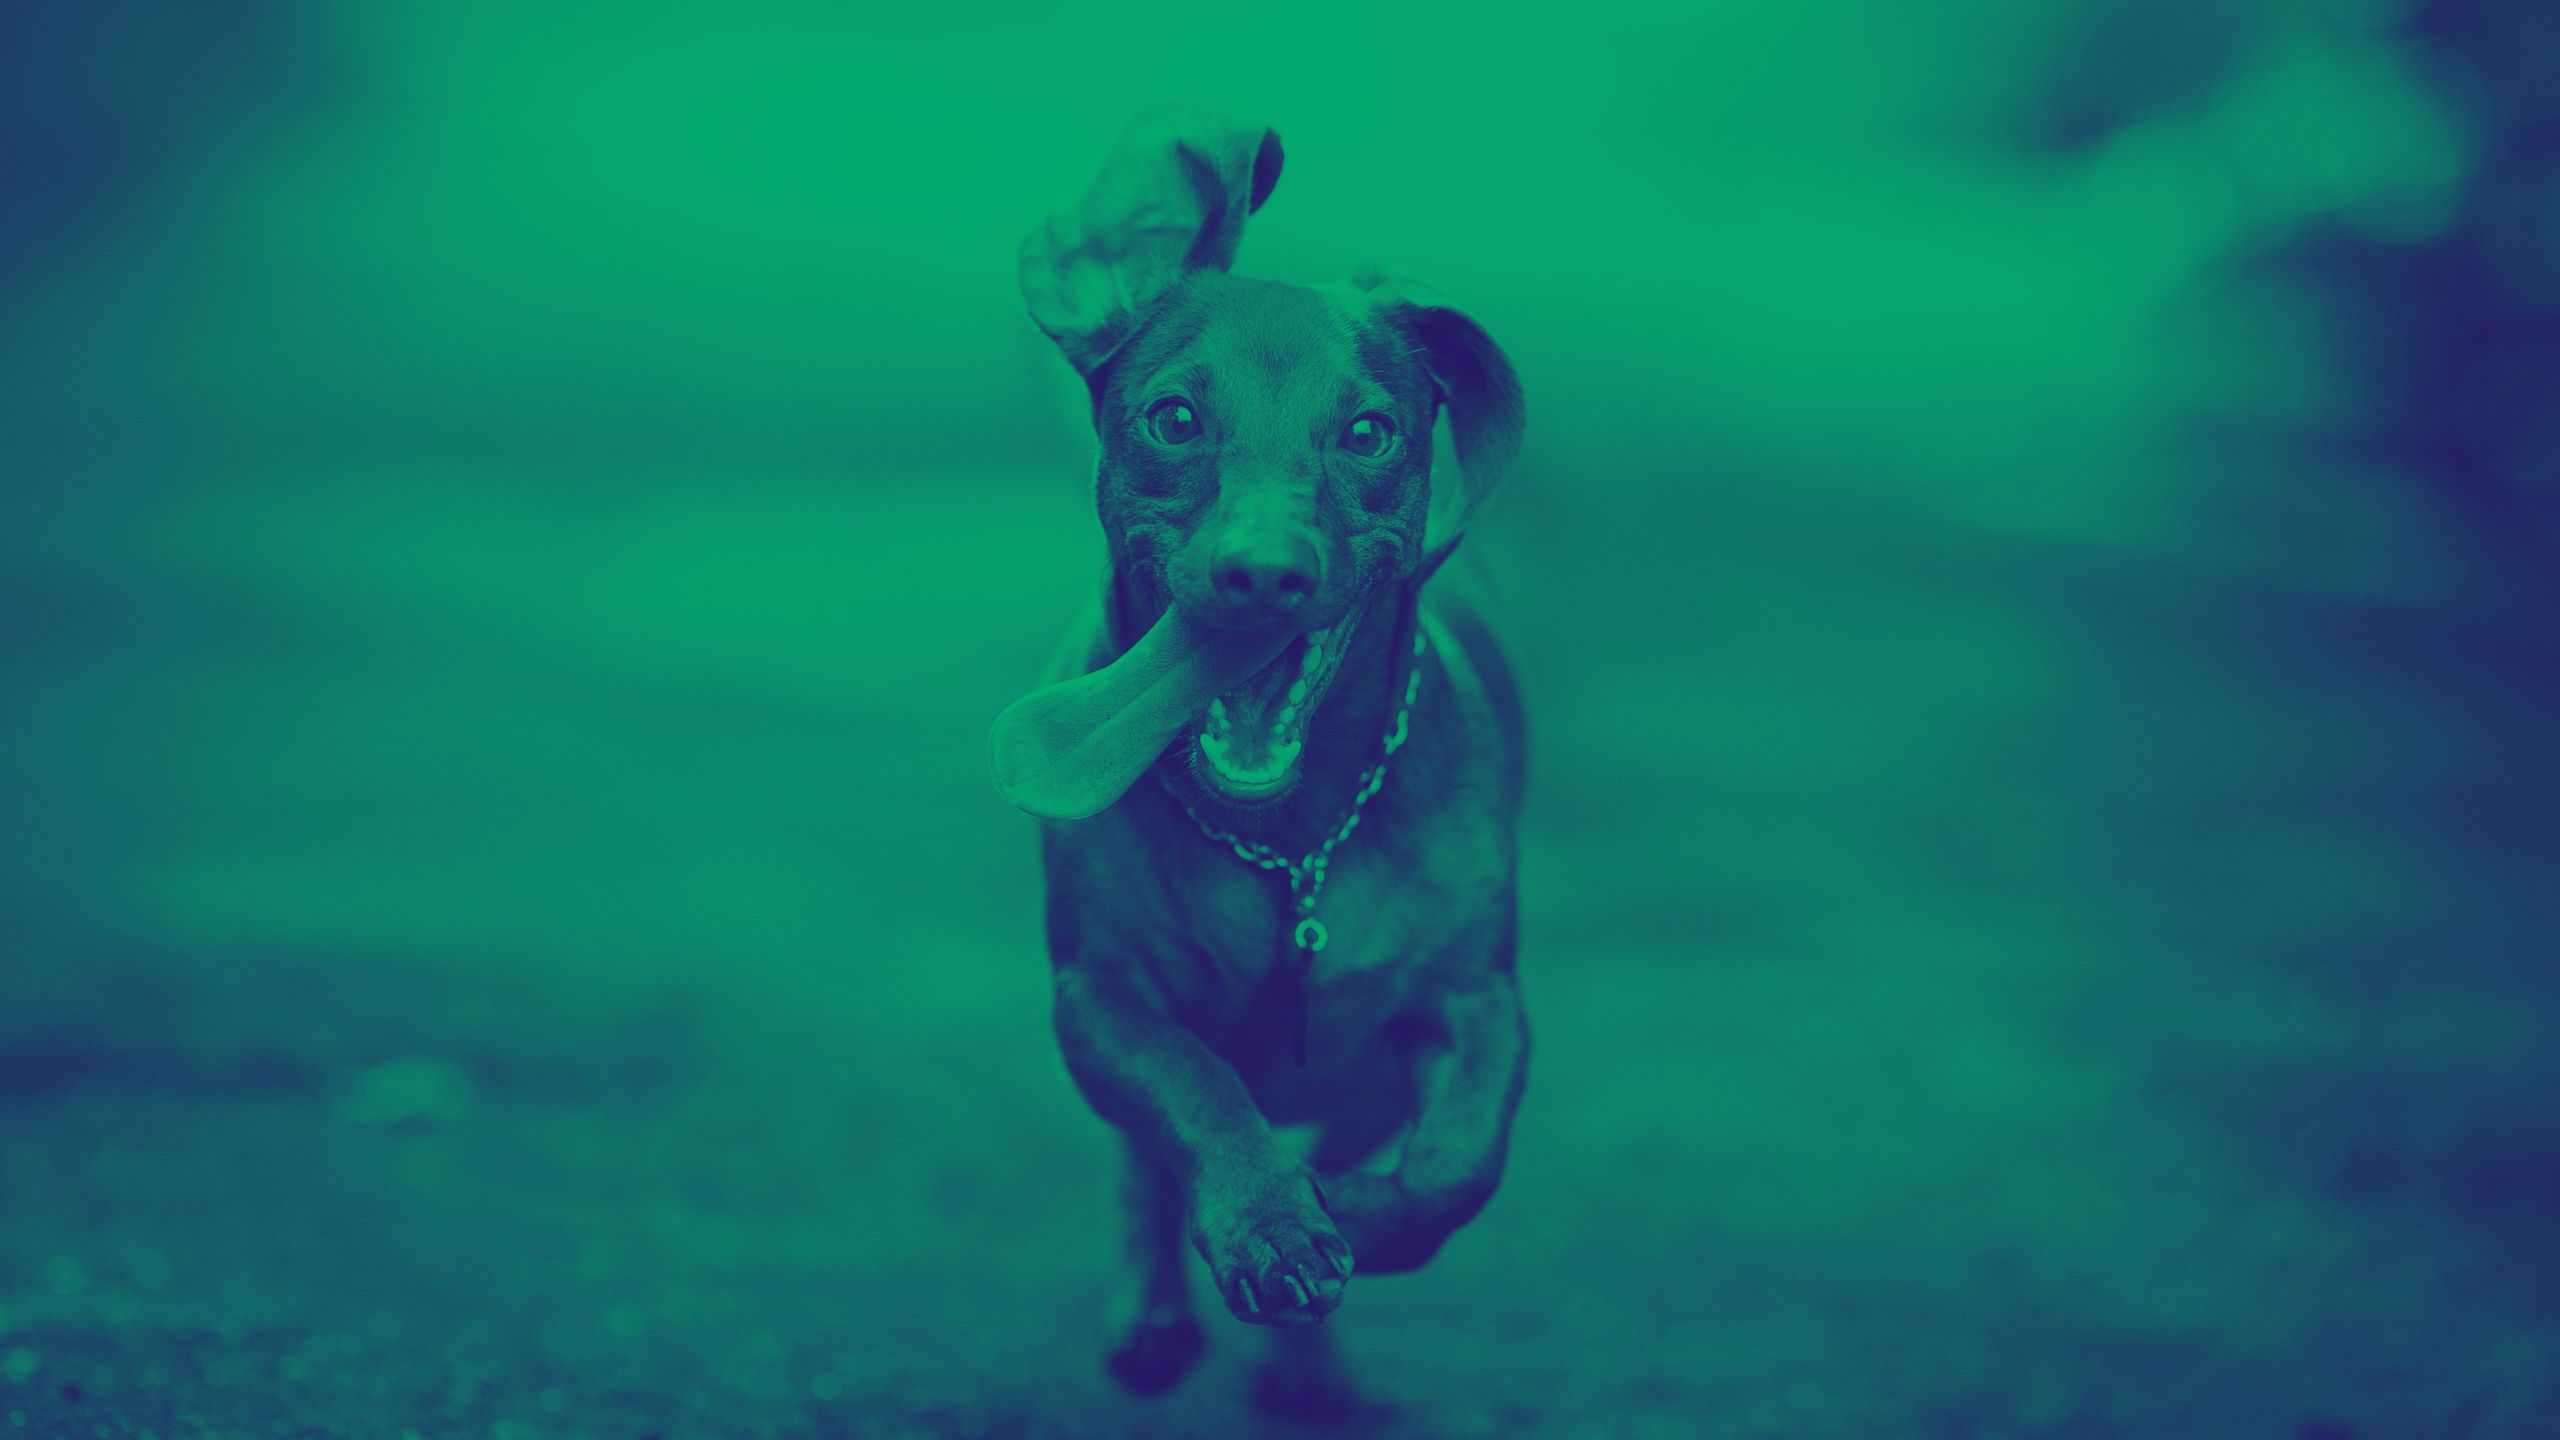 a dachshund runs toward the camera with its tongue out, not unlike a Viking warrior